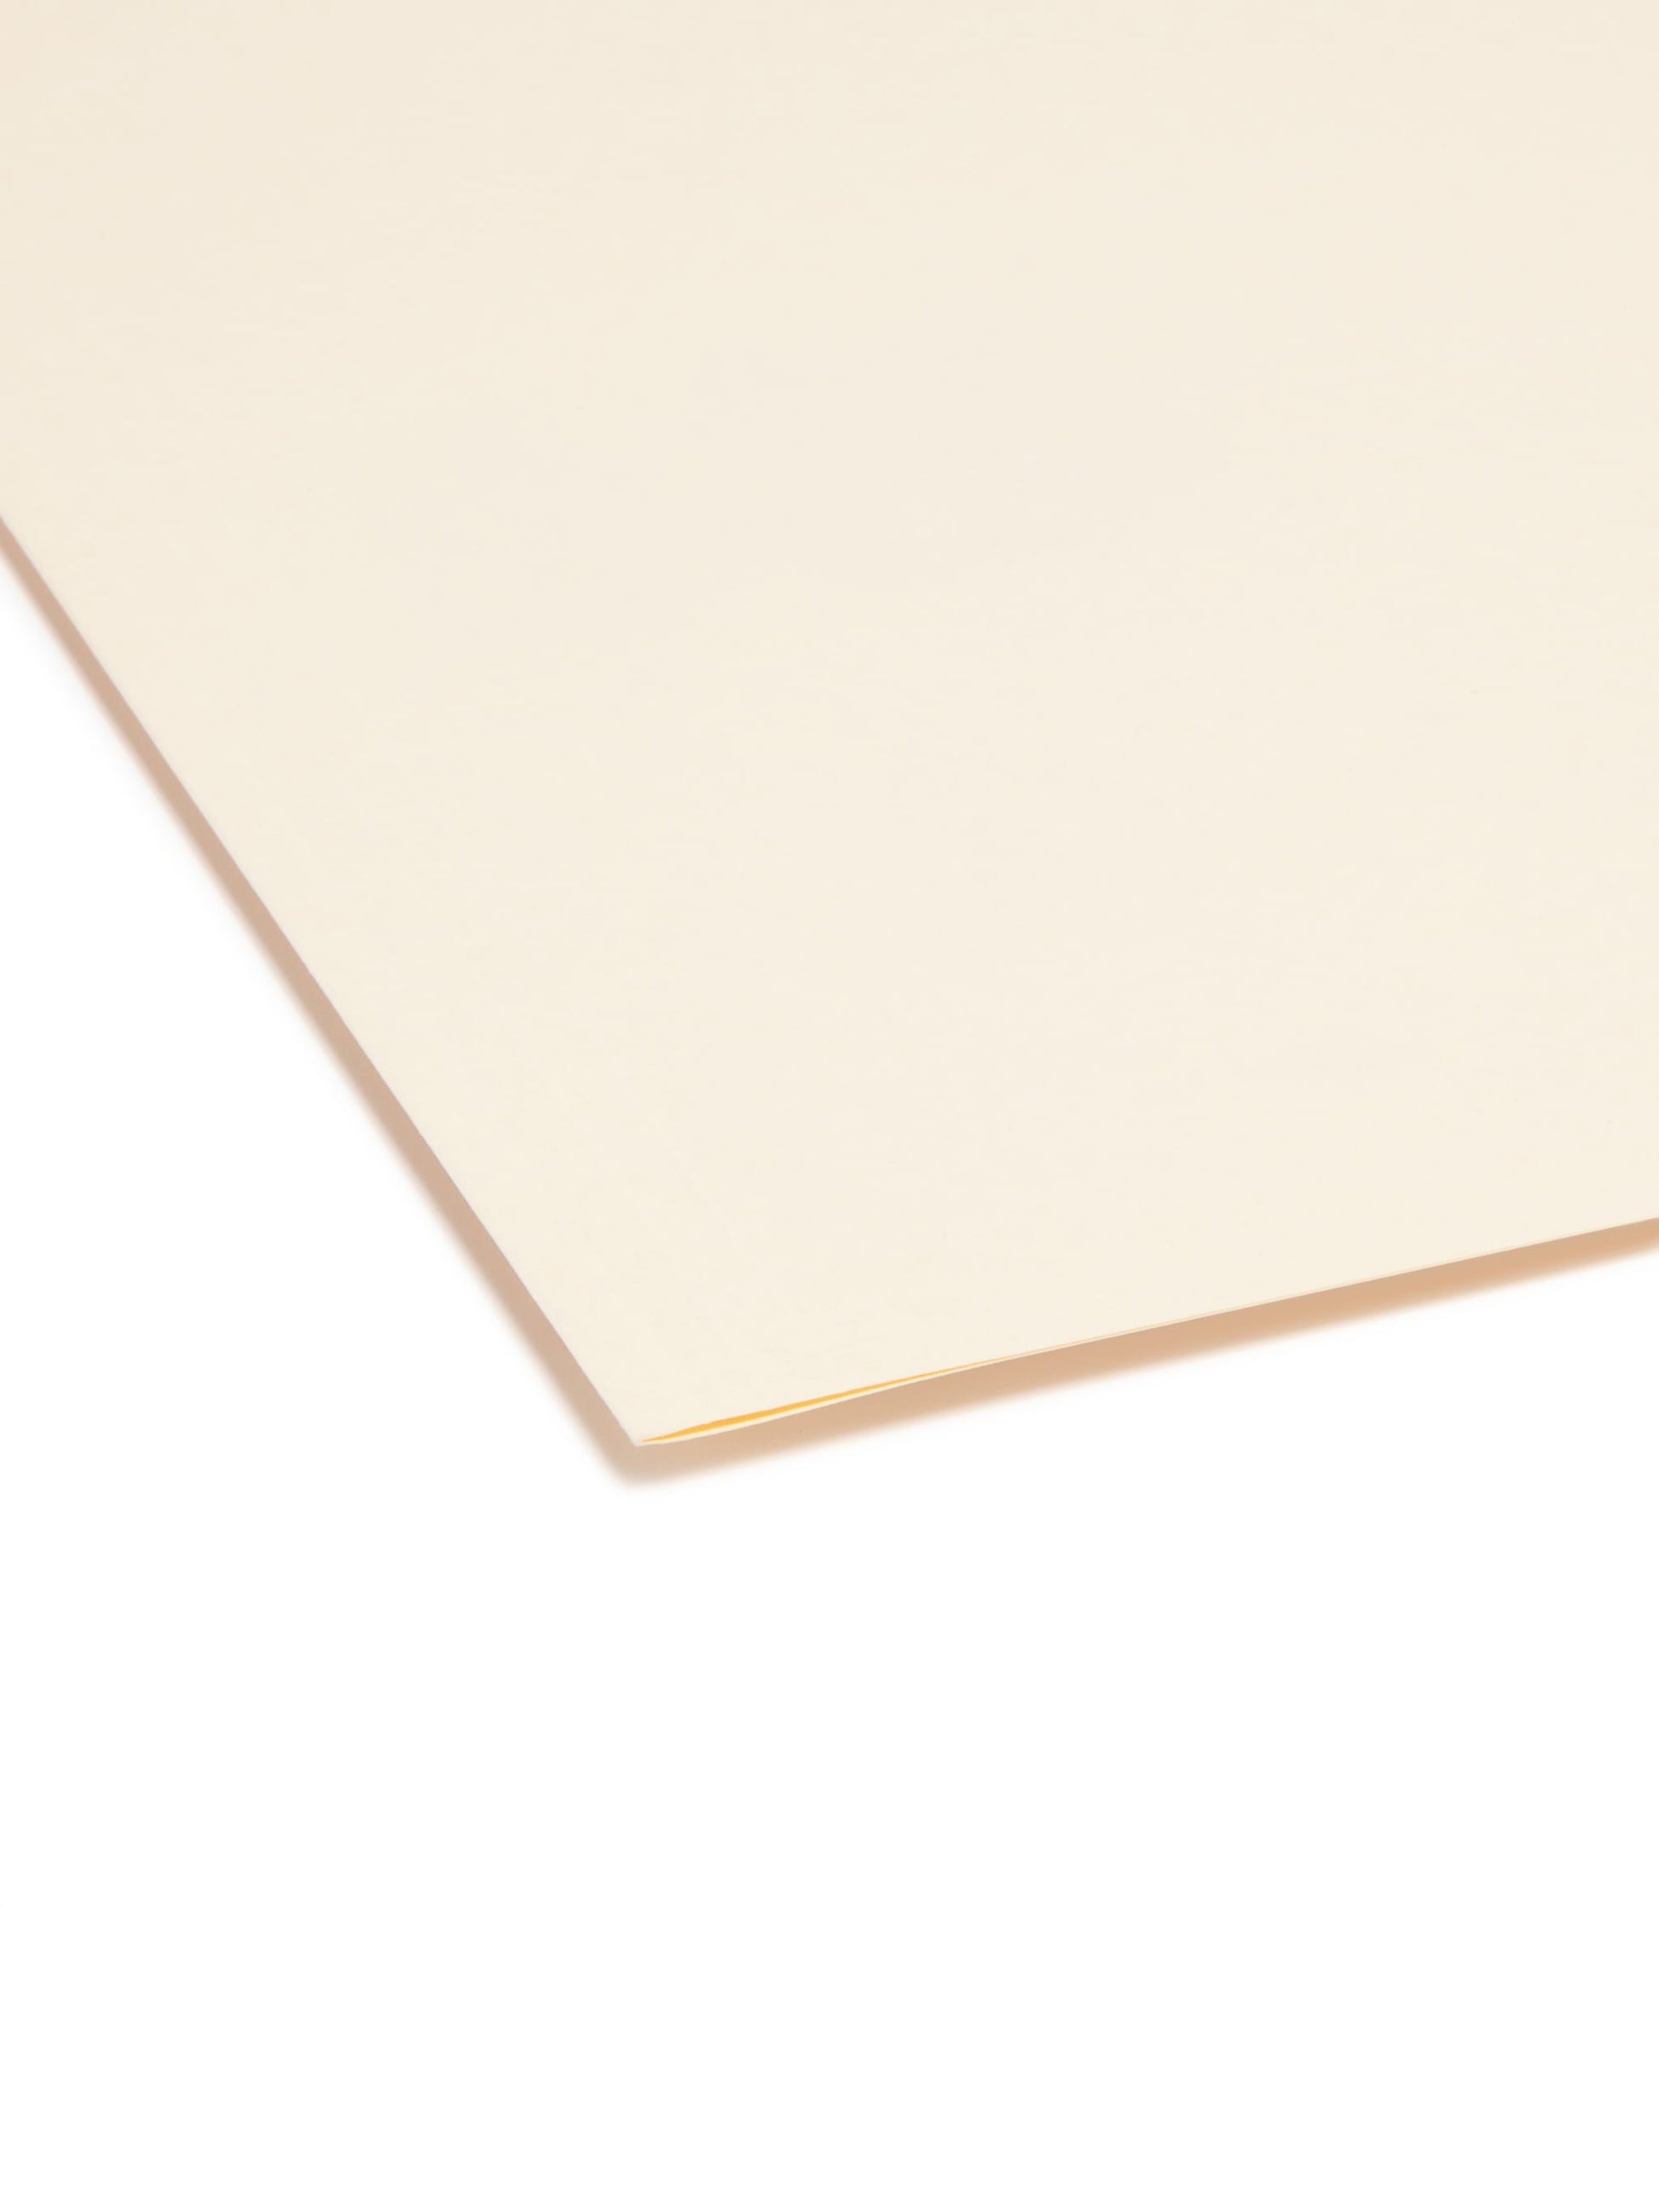 Reinforced Tab File Folders, 1/3-Cut Center Tab, Manila Color, Letter Size, Set of 100, 086486103367